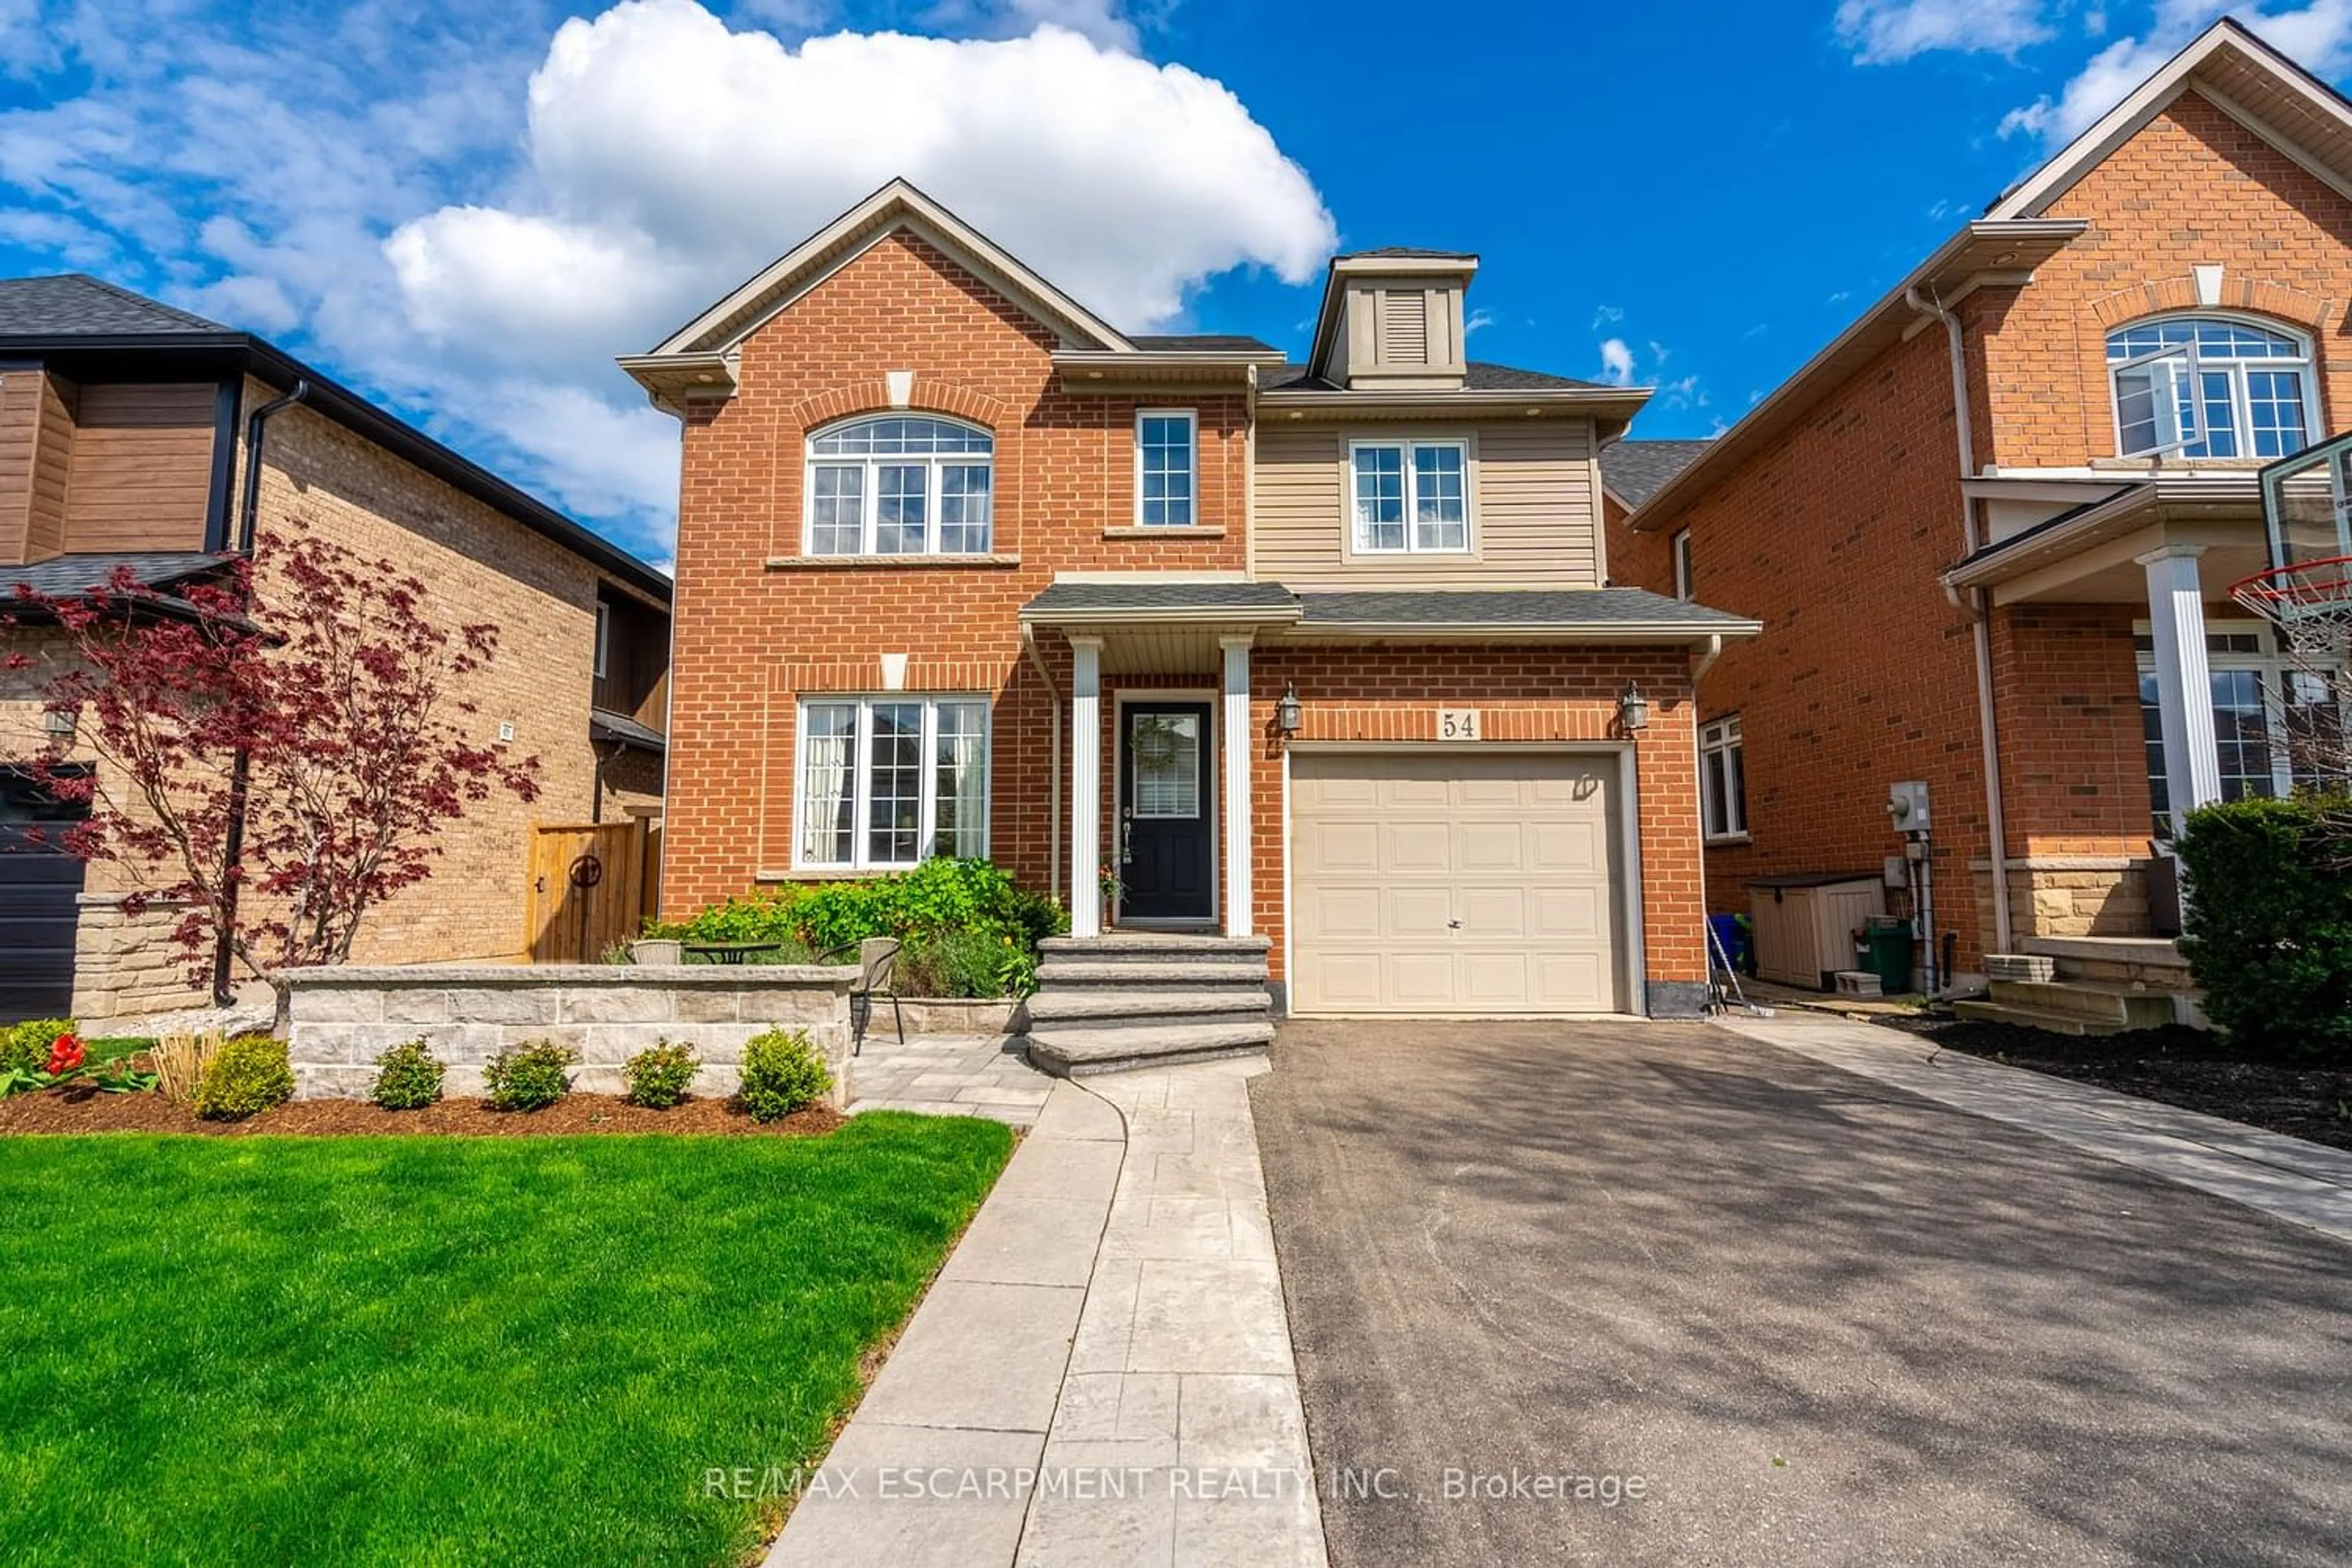 Home with brick exterior material for 54 Ivybridge Dr, Hamilton Ontario L8E 0A4